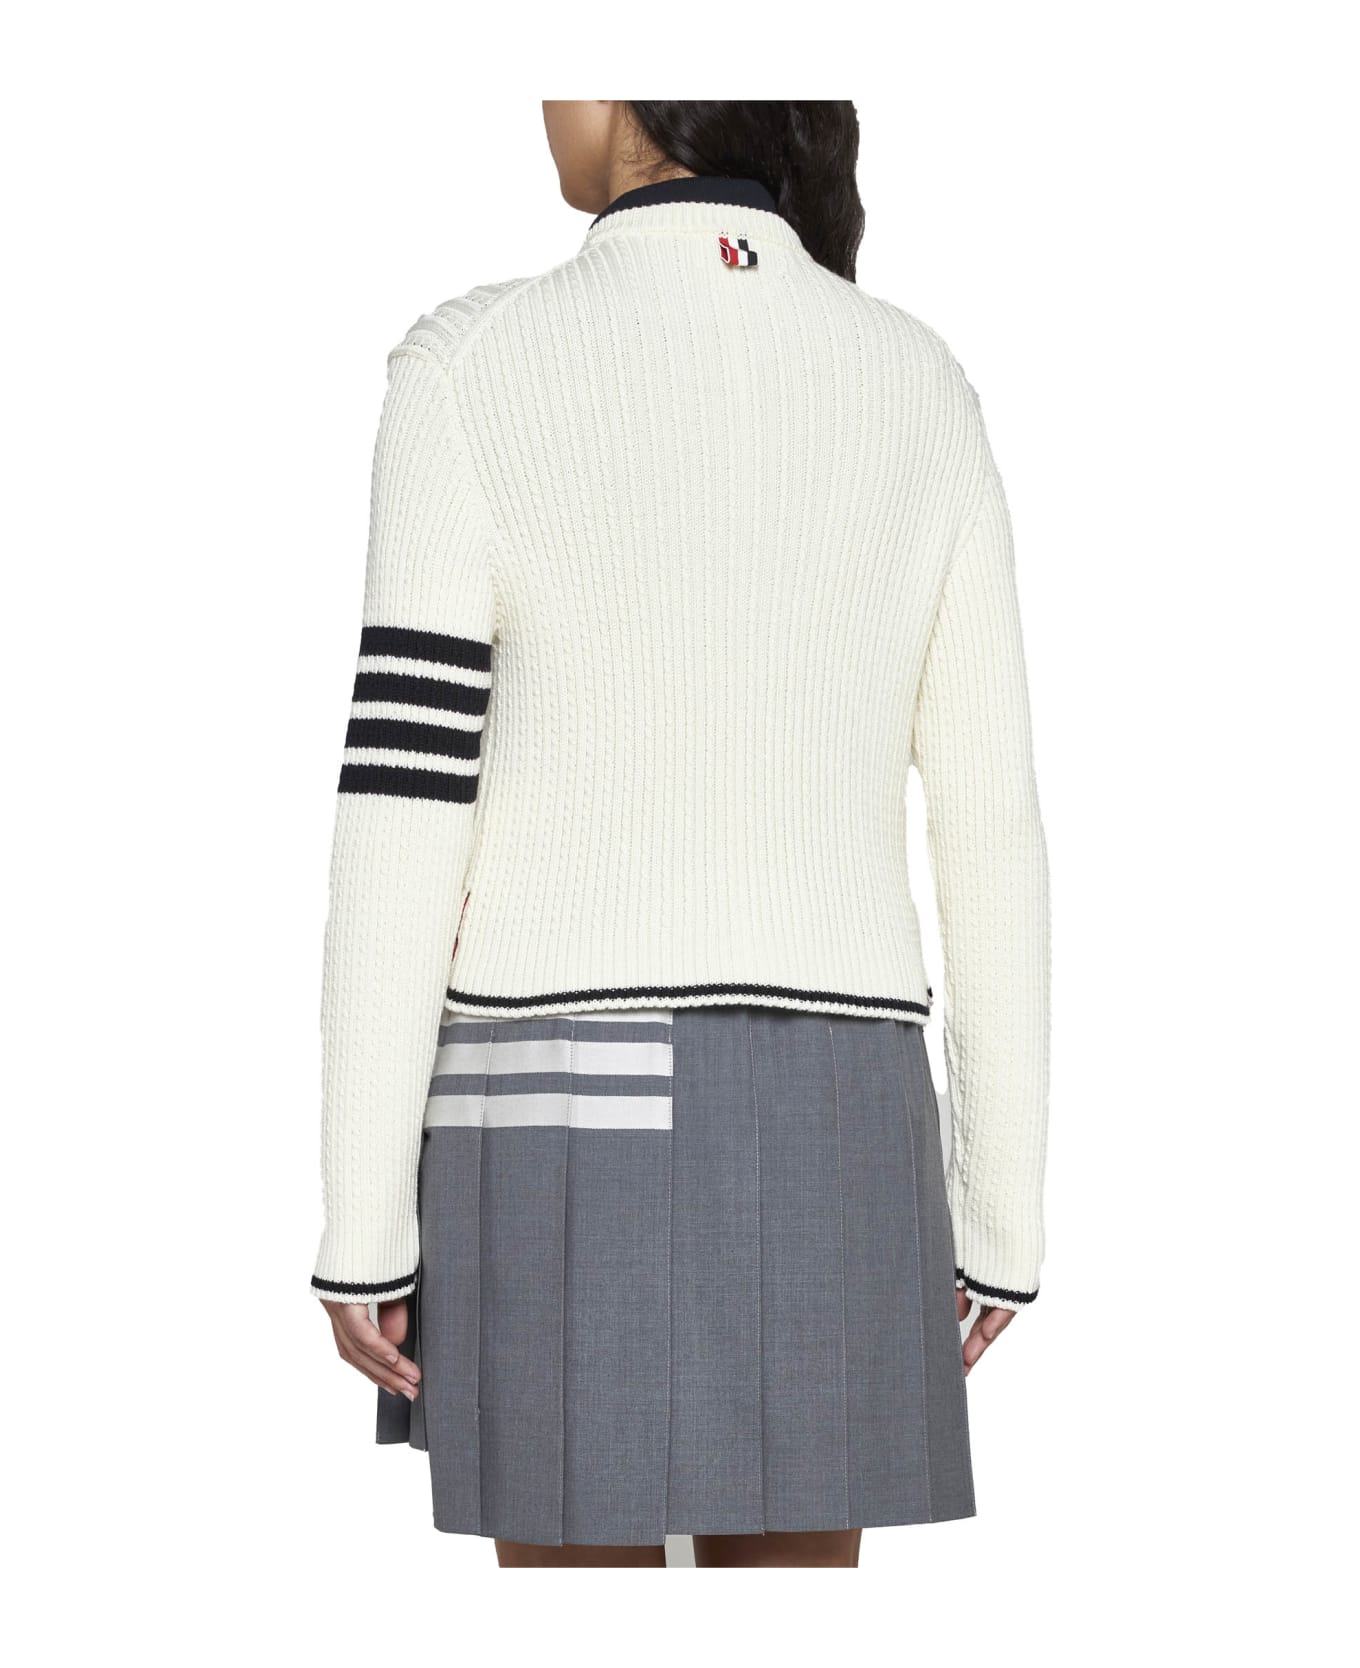 Thom Browne Sweater - White ニットウェア